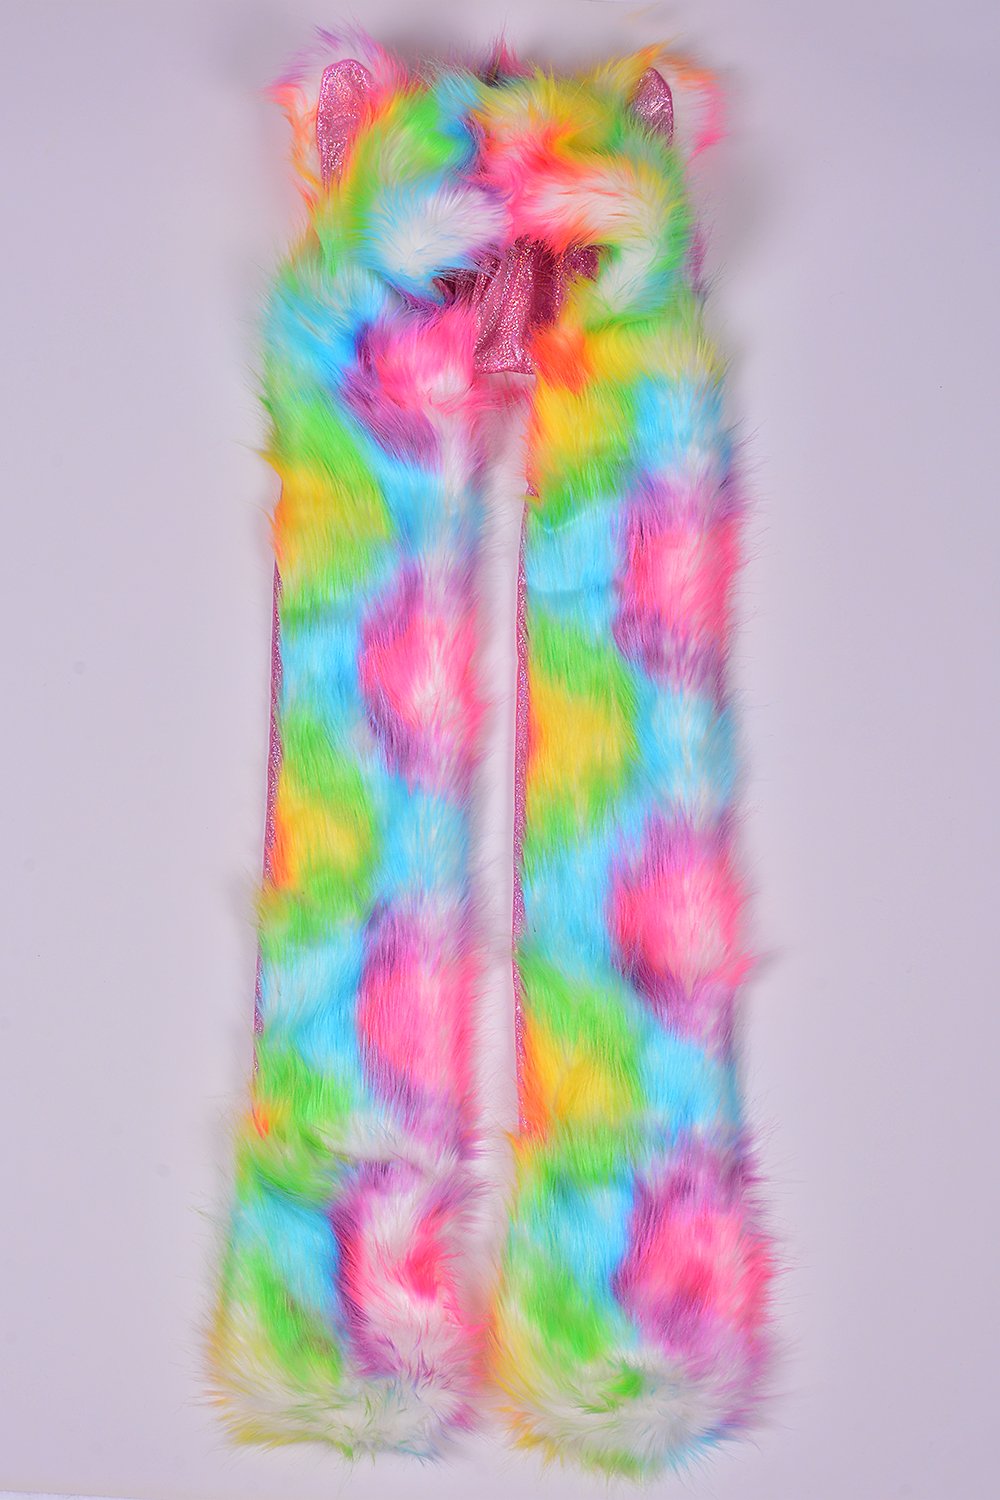 Cotton Candy Tie Dye Animal Fur Hood